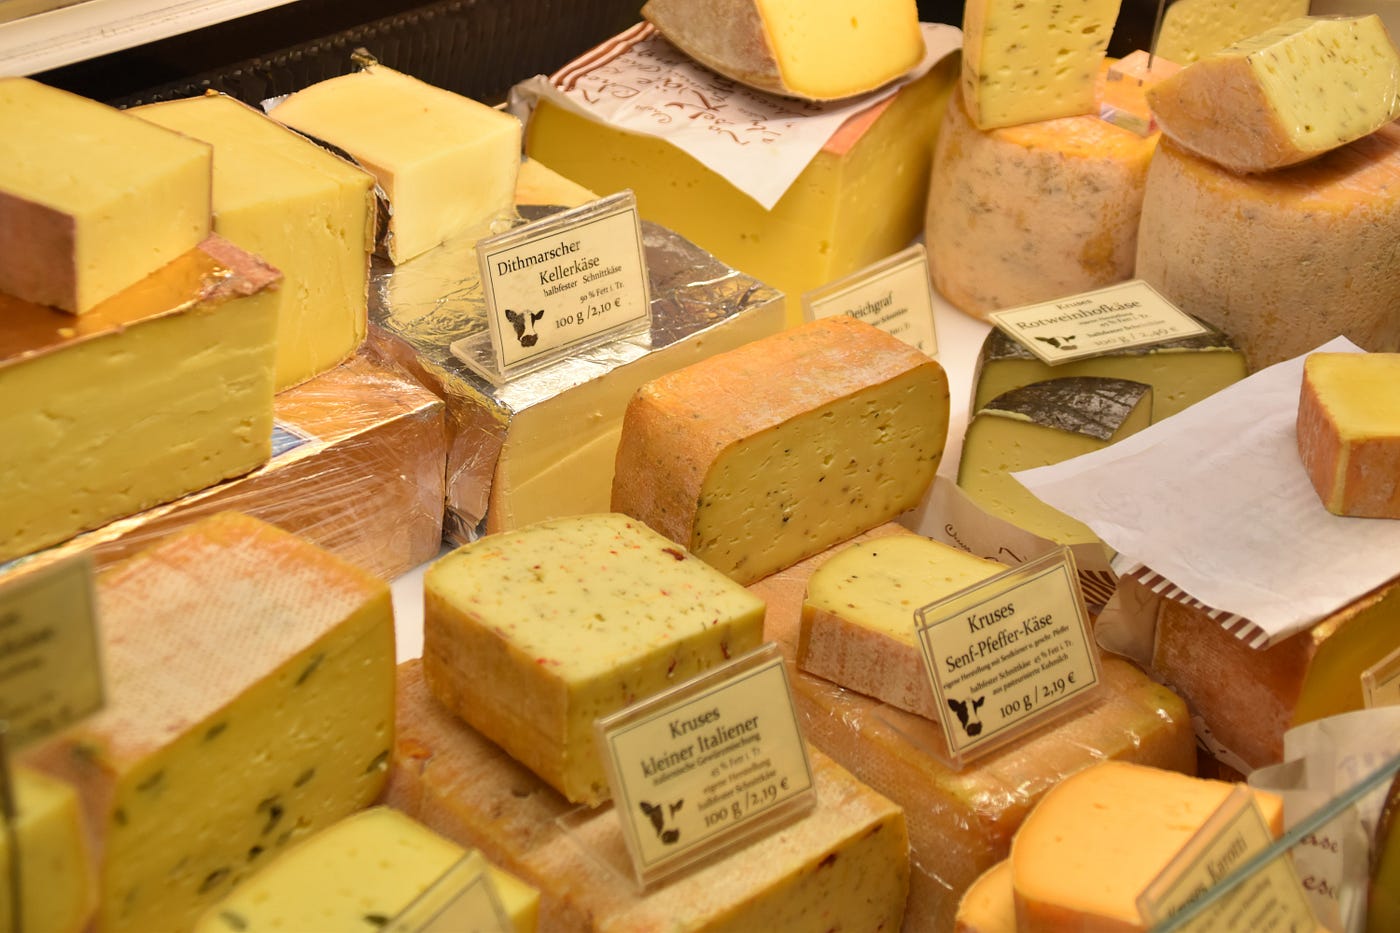 display of blocks of cheese at a supermarket